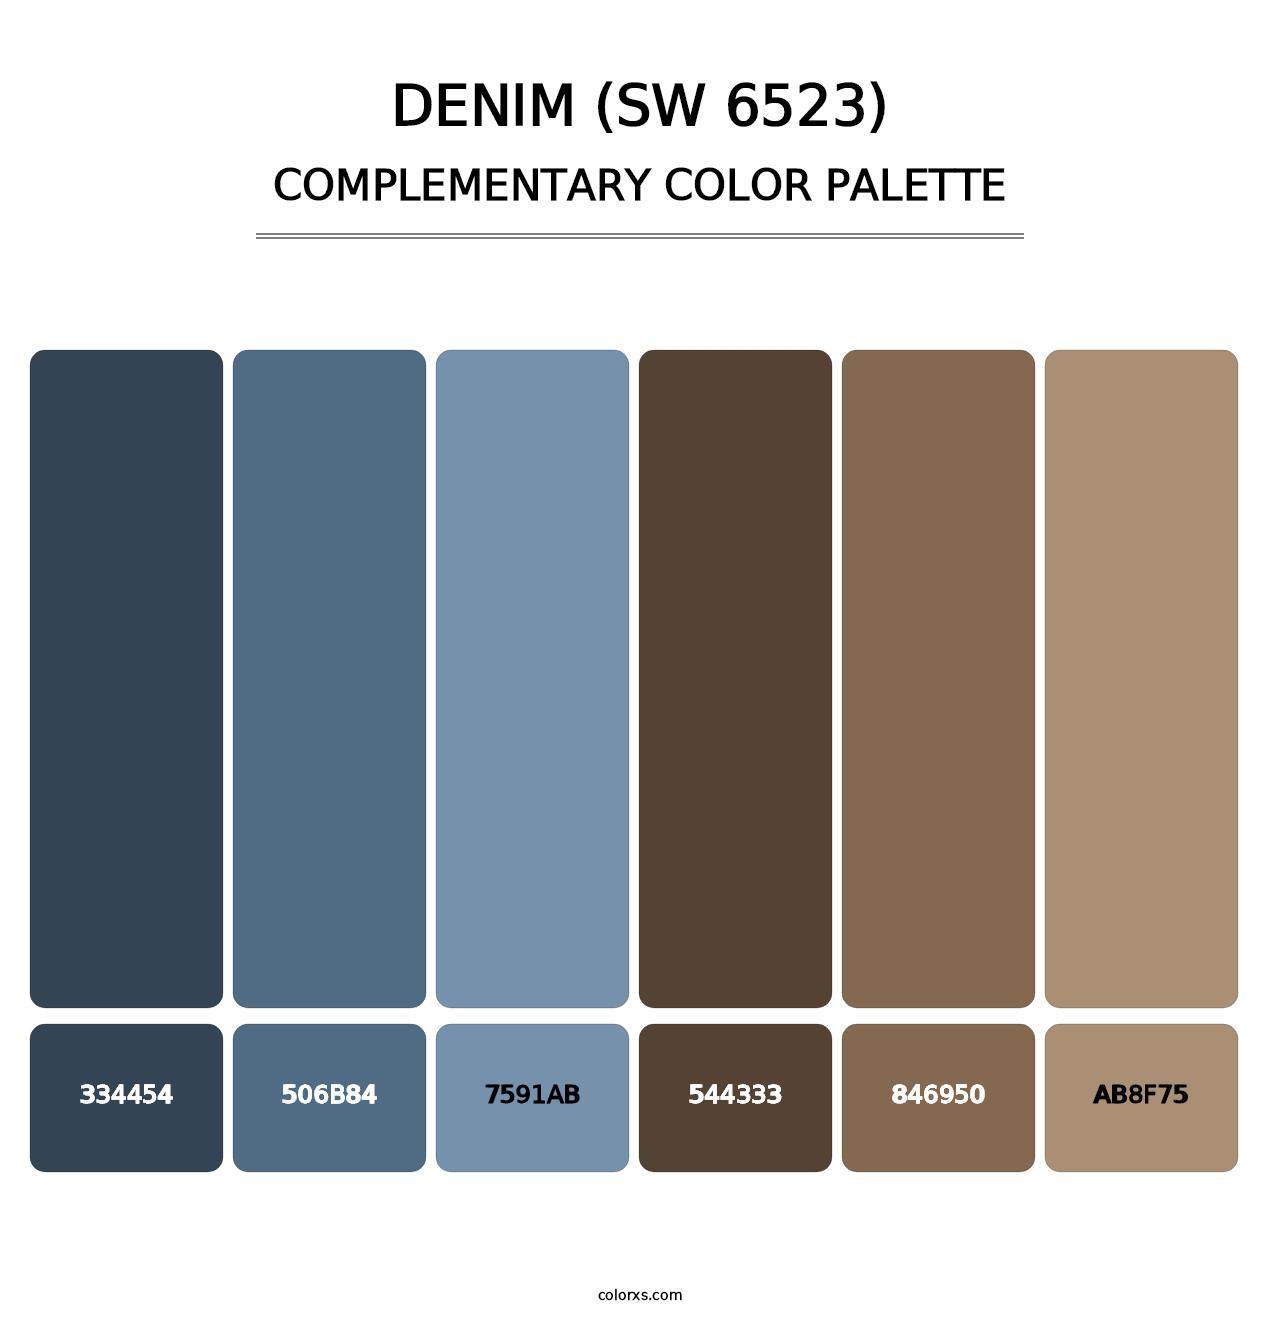 Denim (SW 6523) - Complementary Color Palette